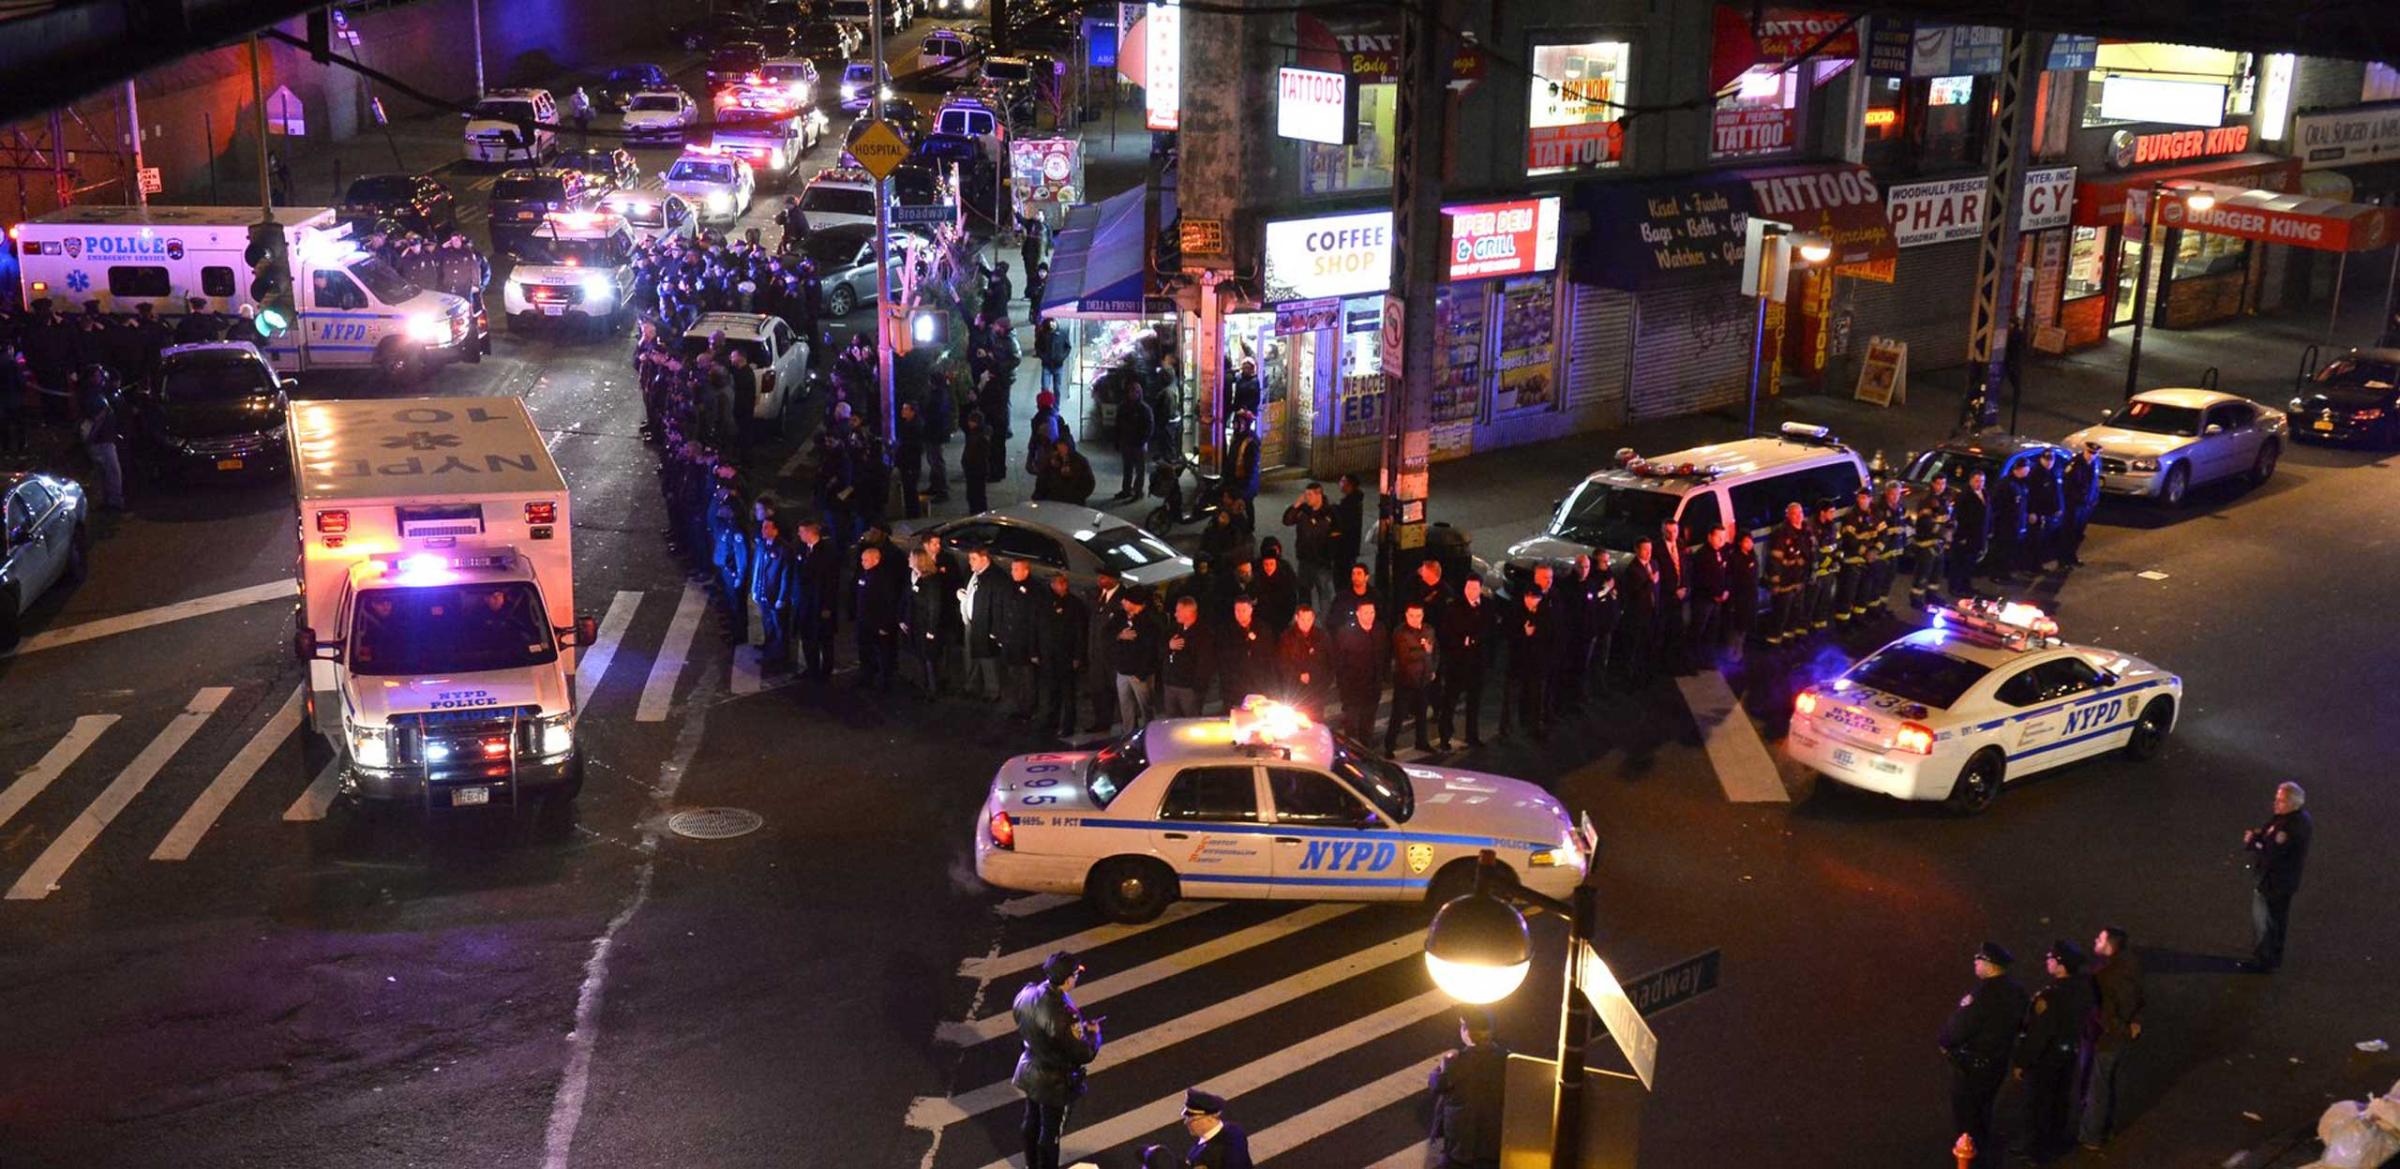 NY police salute fallen comrades